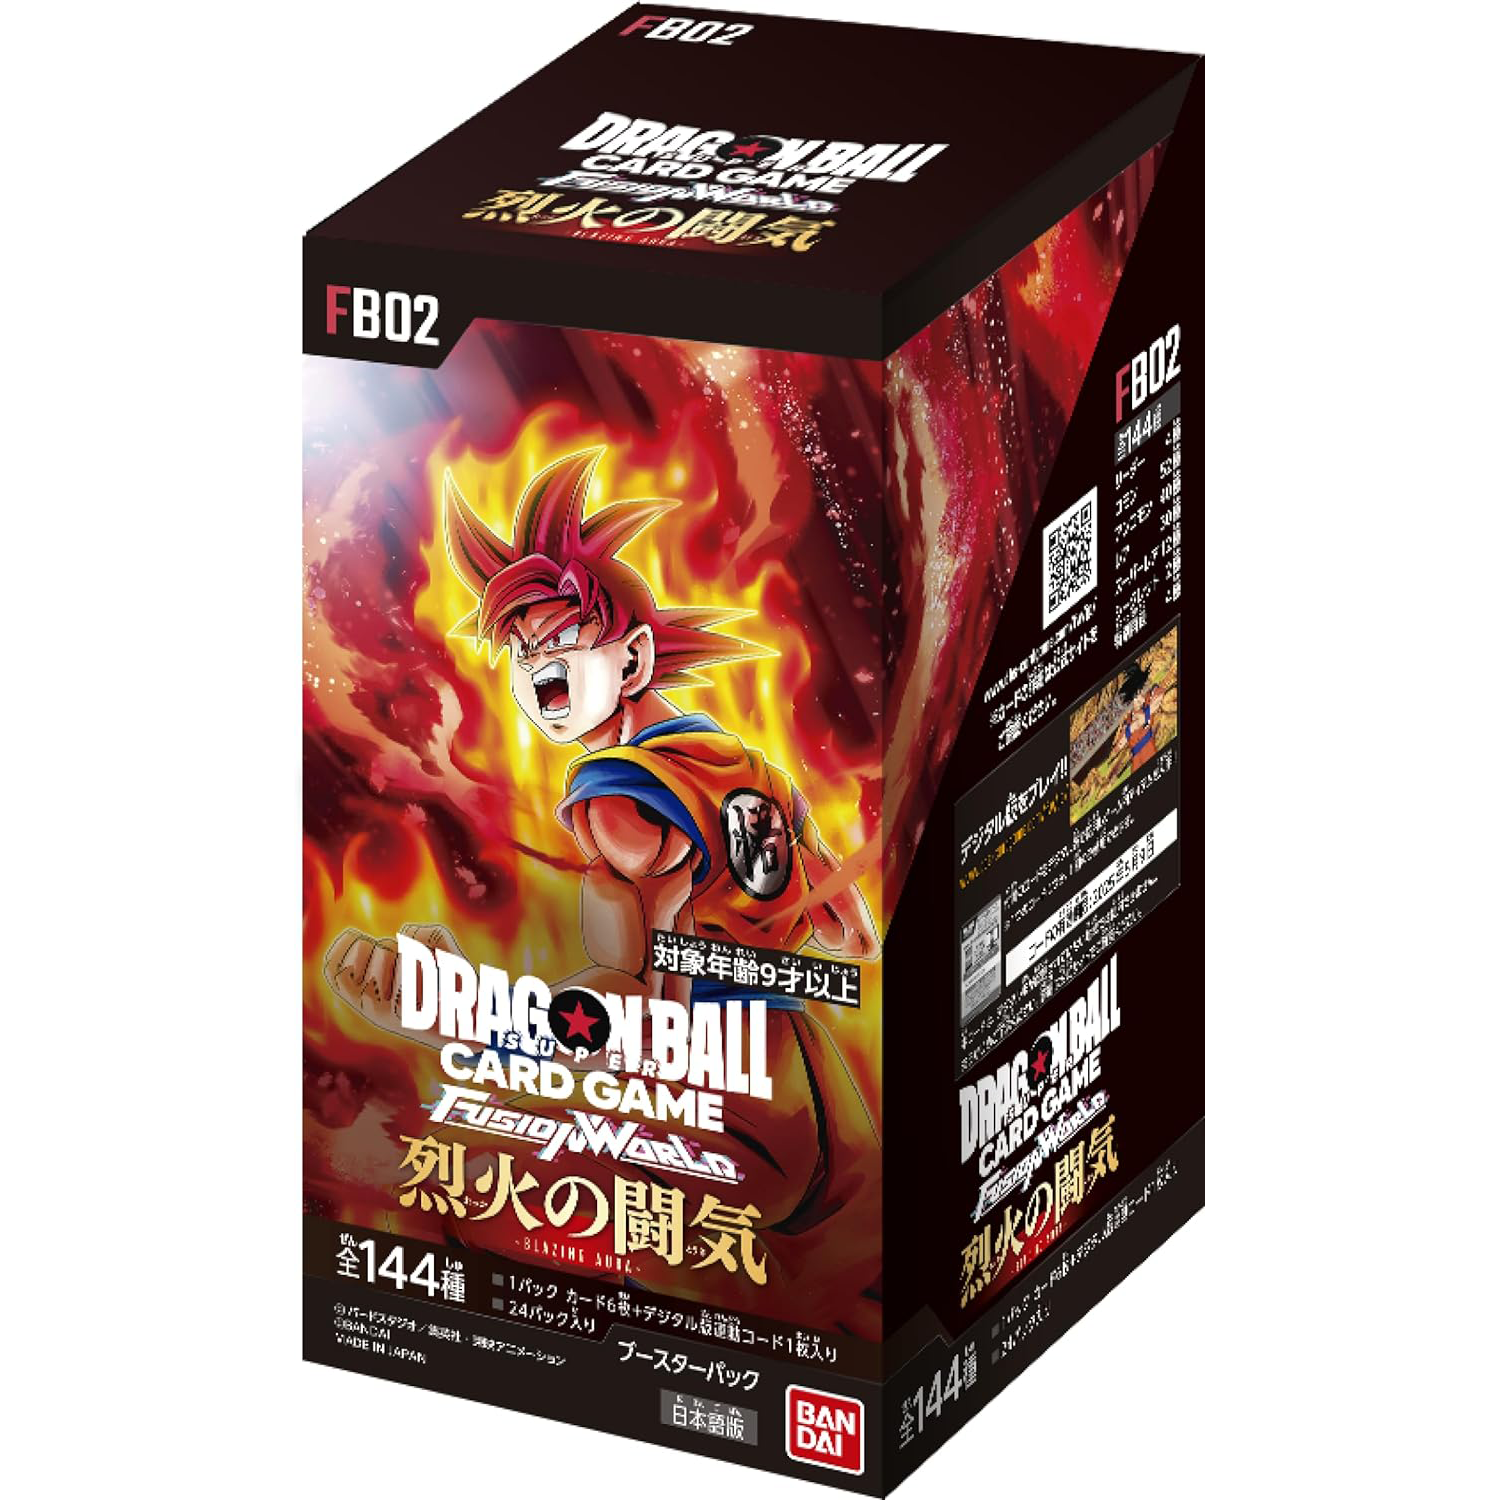 [FB02] DRAGON BALL SUPER CARD GAME FUSION WORLD Booster Pack ｢BLAZING AURA｣ Box